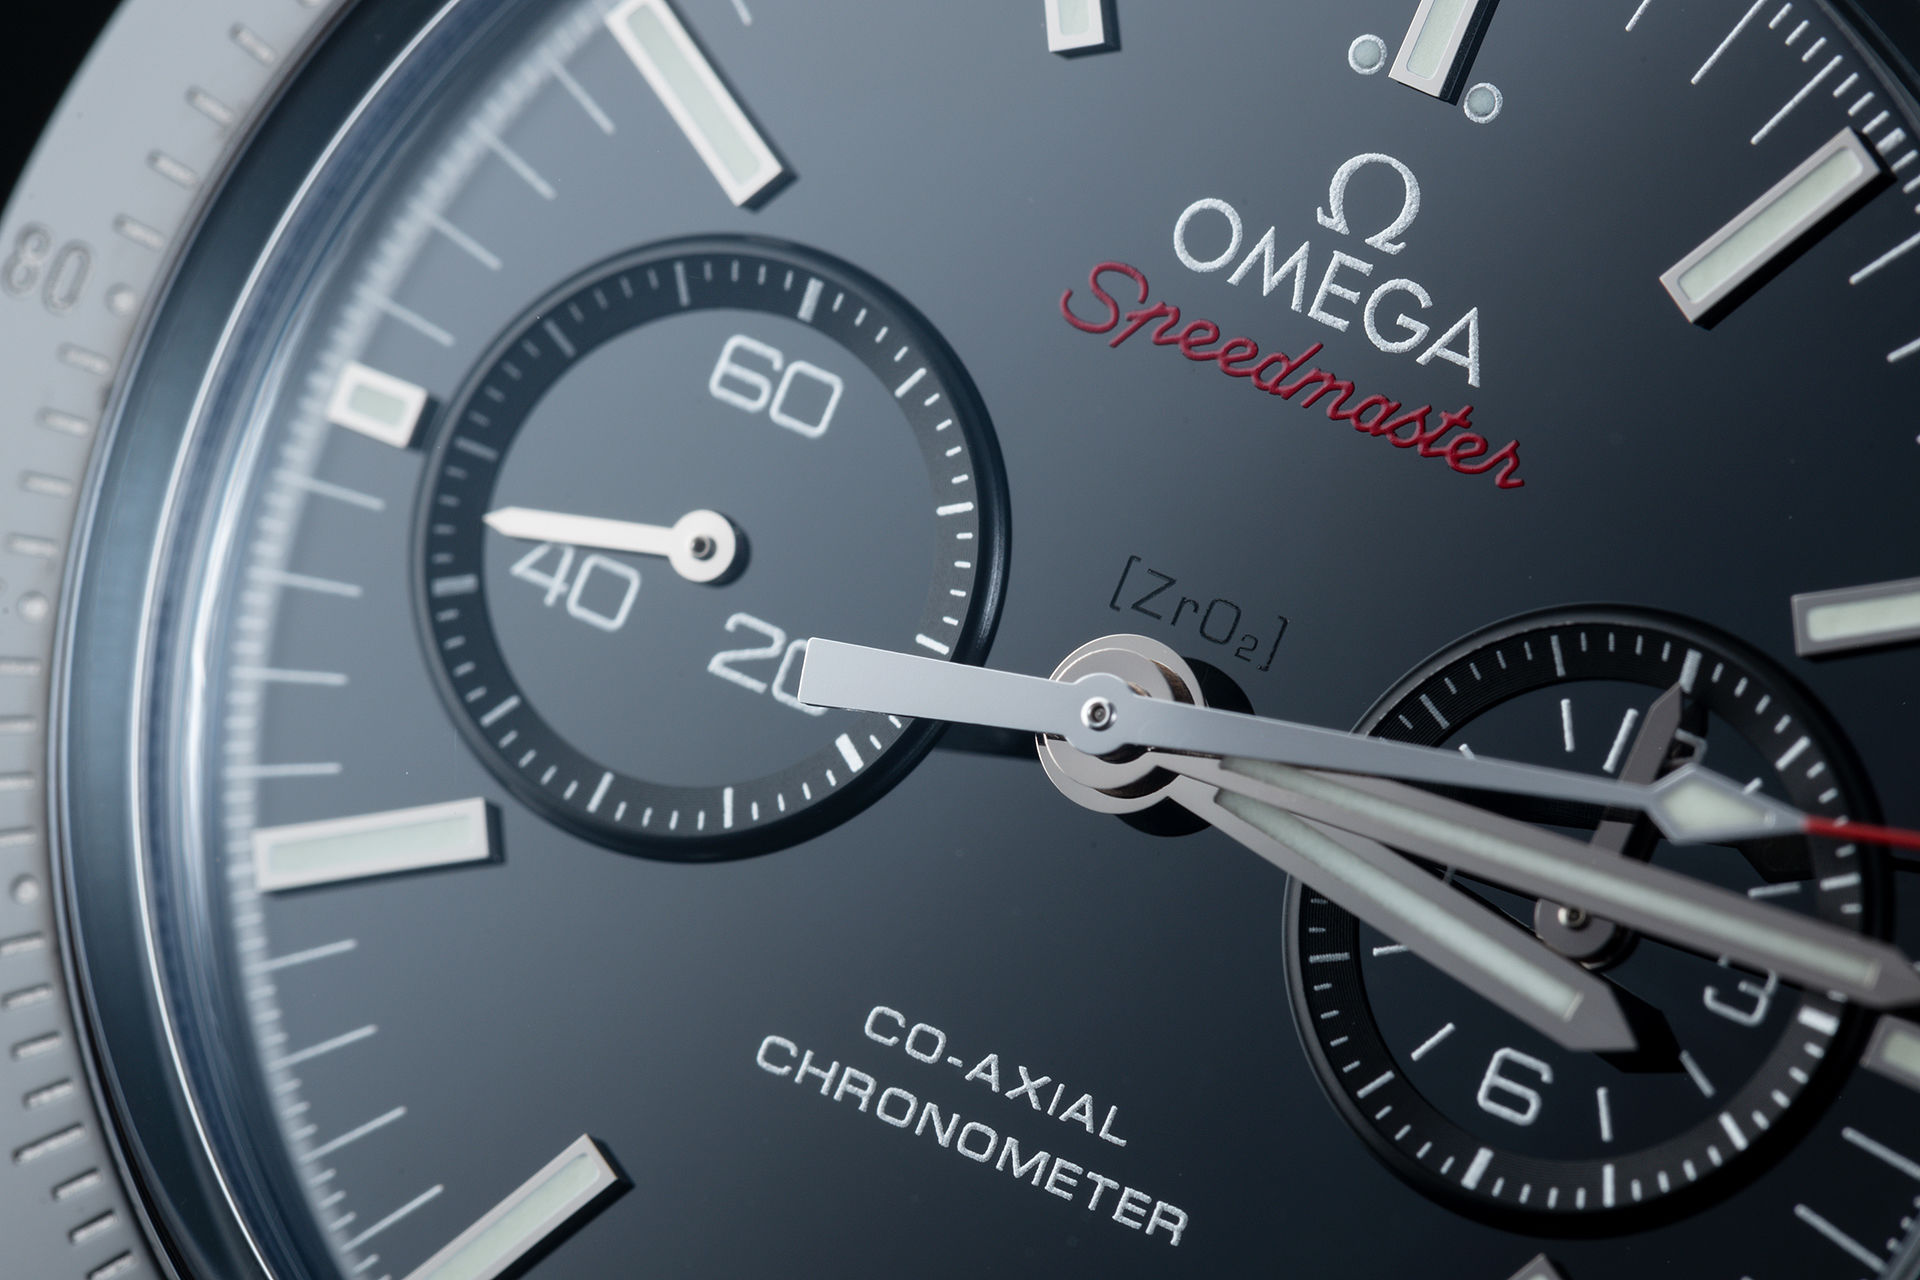 ref 31192445101007 | Perfect 'Complete Set' | Omega Speedmaster